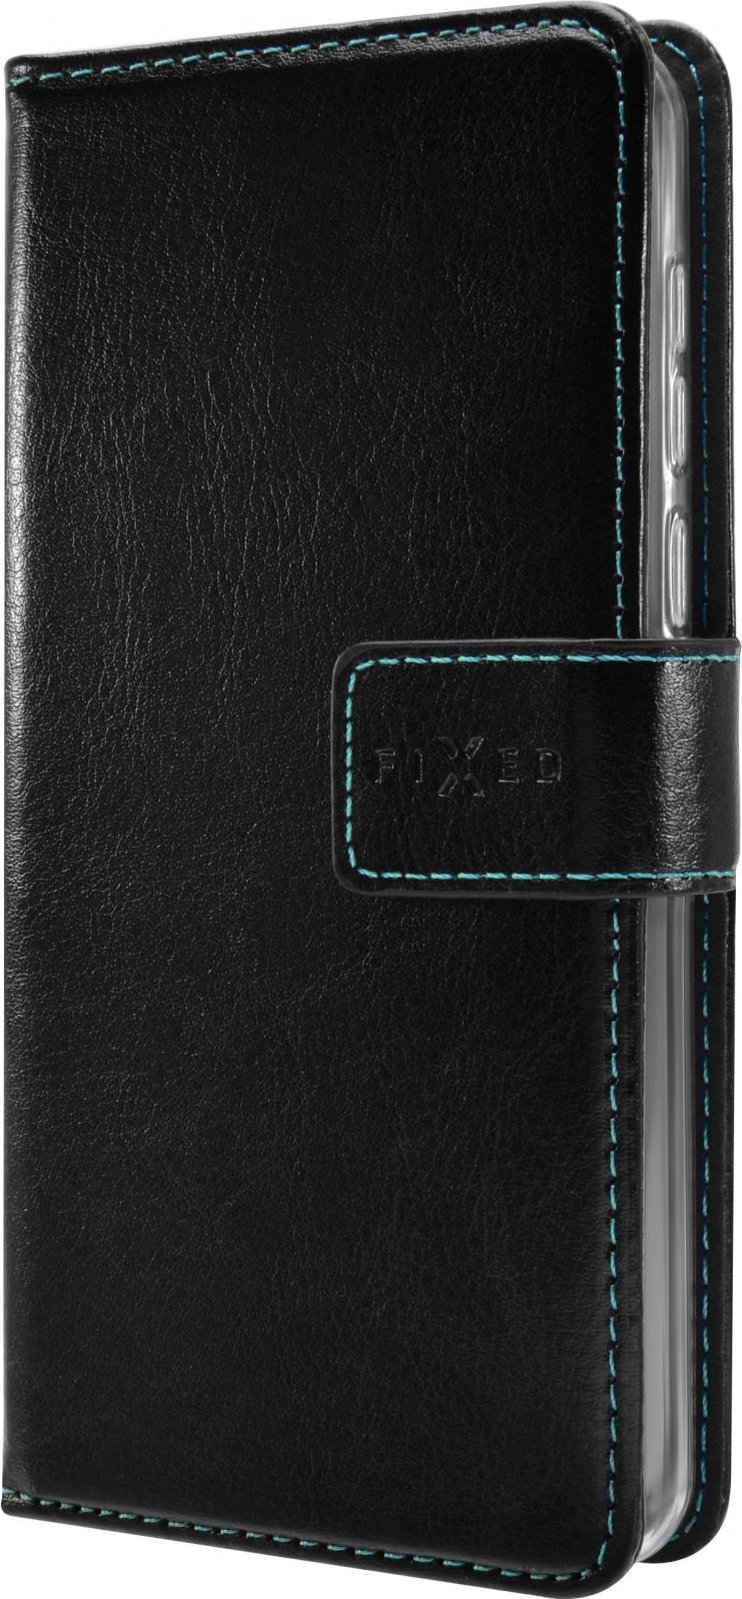 Pouzdro typu kniha FIXED Opus pro Samsung Galaxy A51, černé